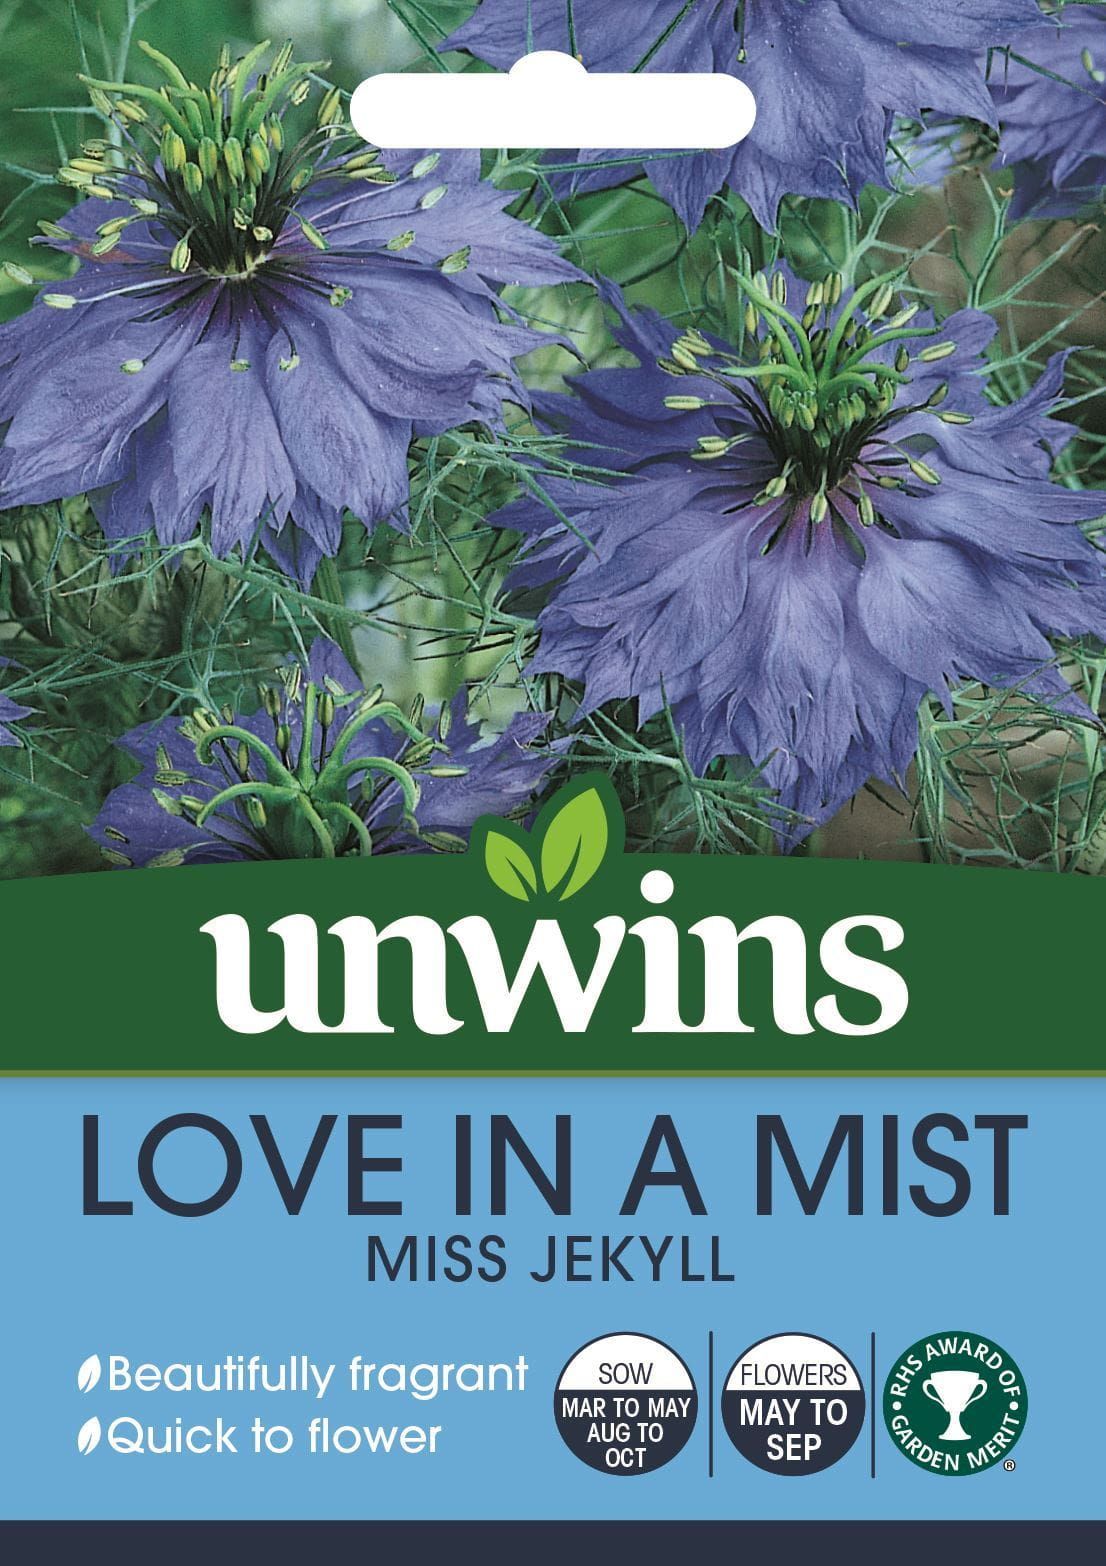 Unwins Nigella Love In A Mist Miss Jekyll 650 Seeds